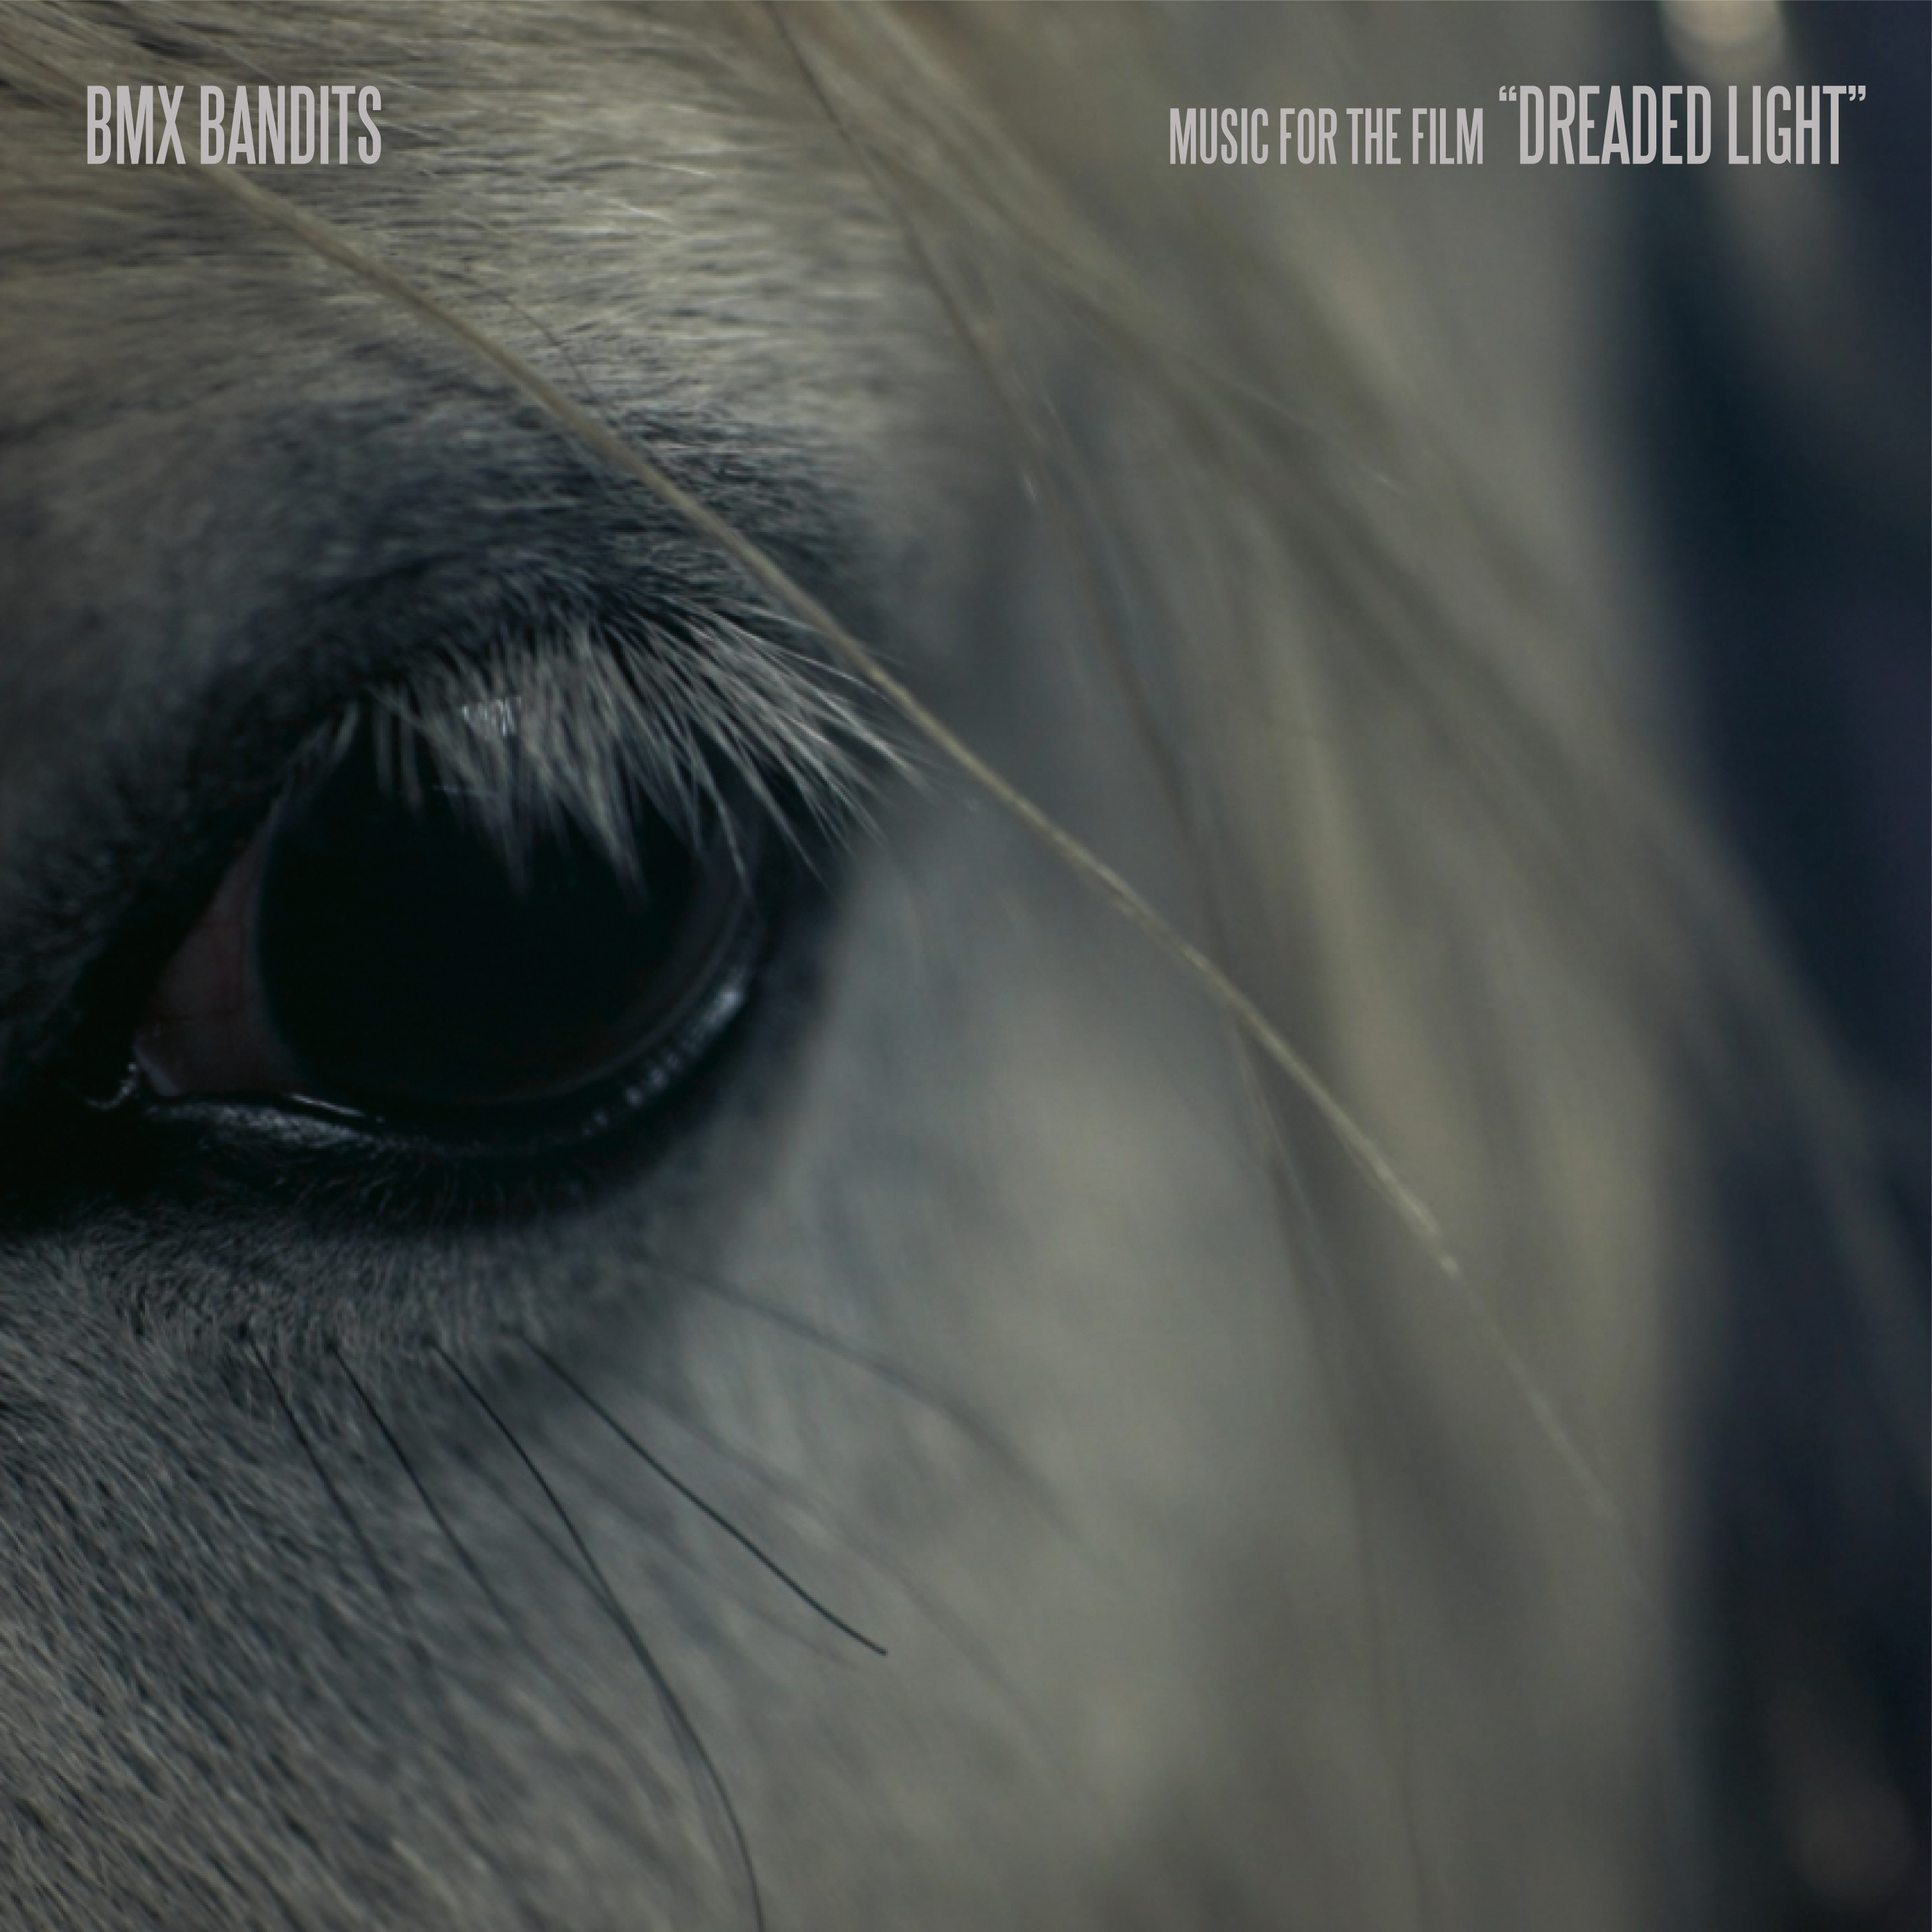 BMX Bandits – Music for the film "Dreaded Light"